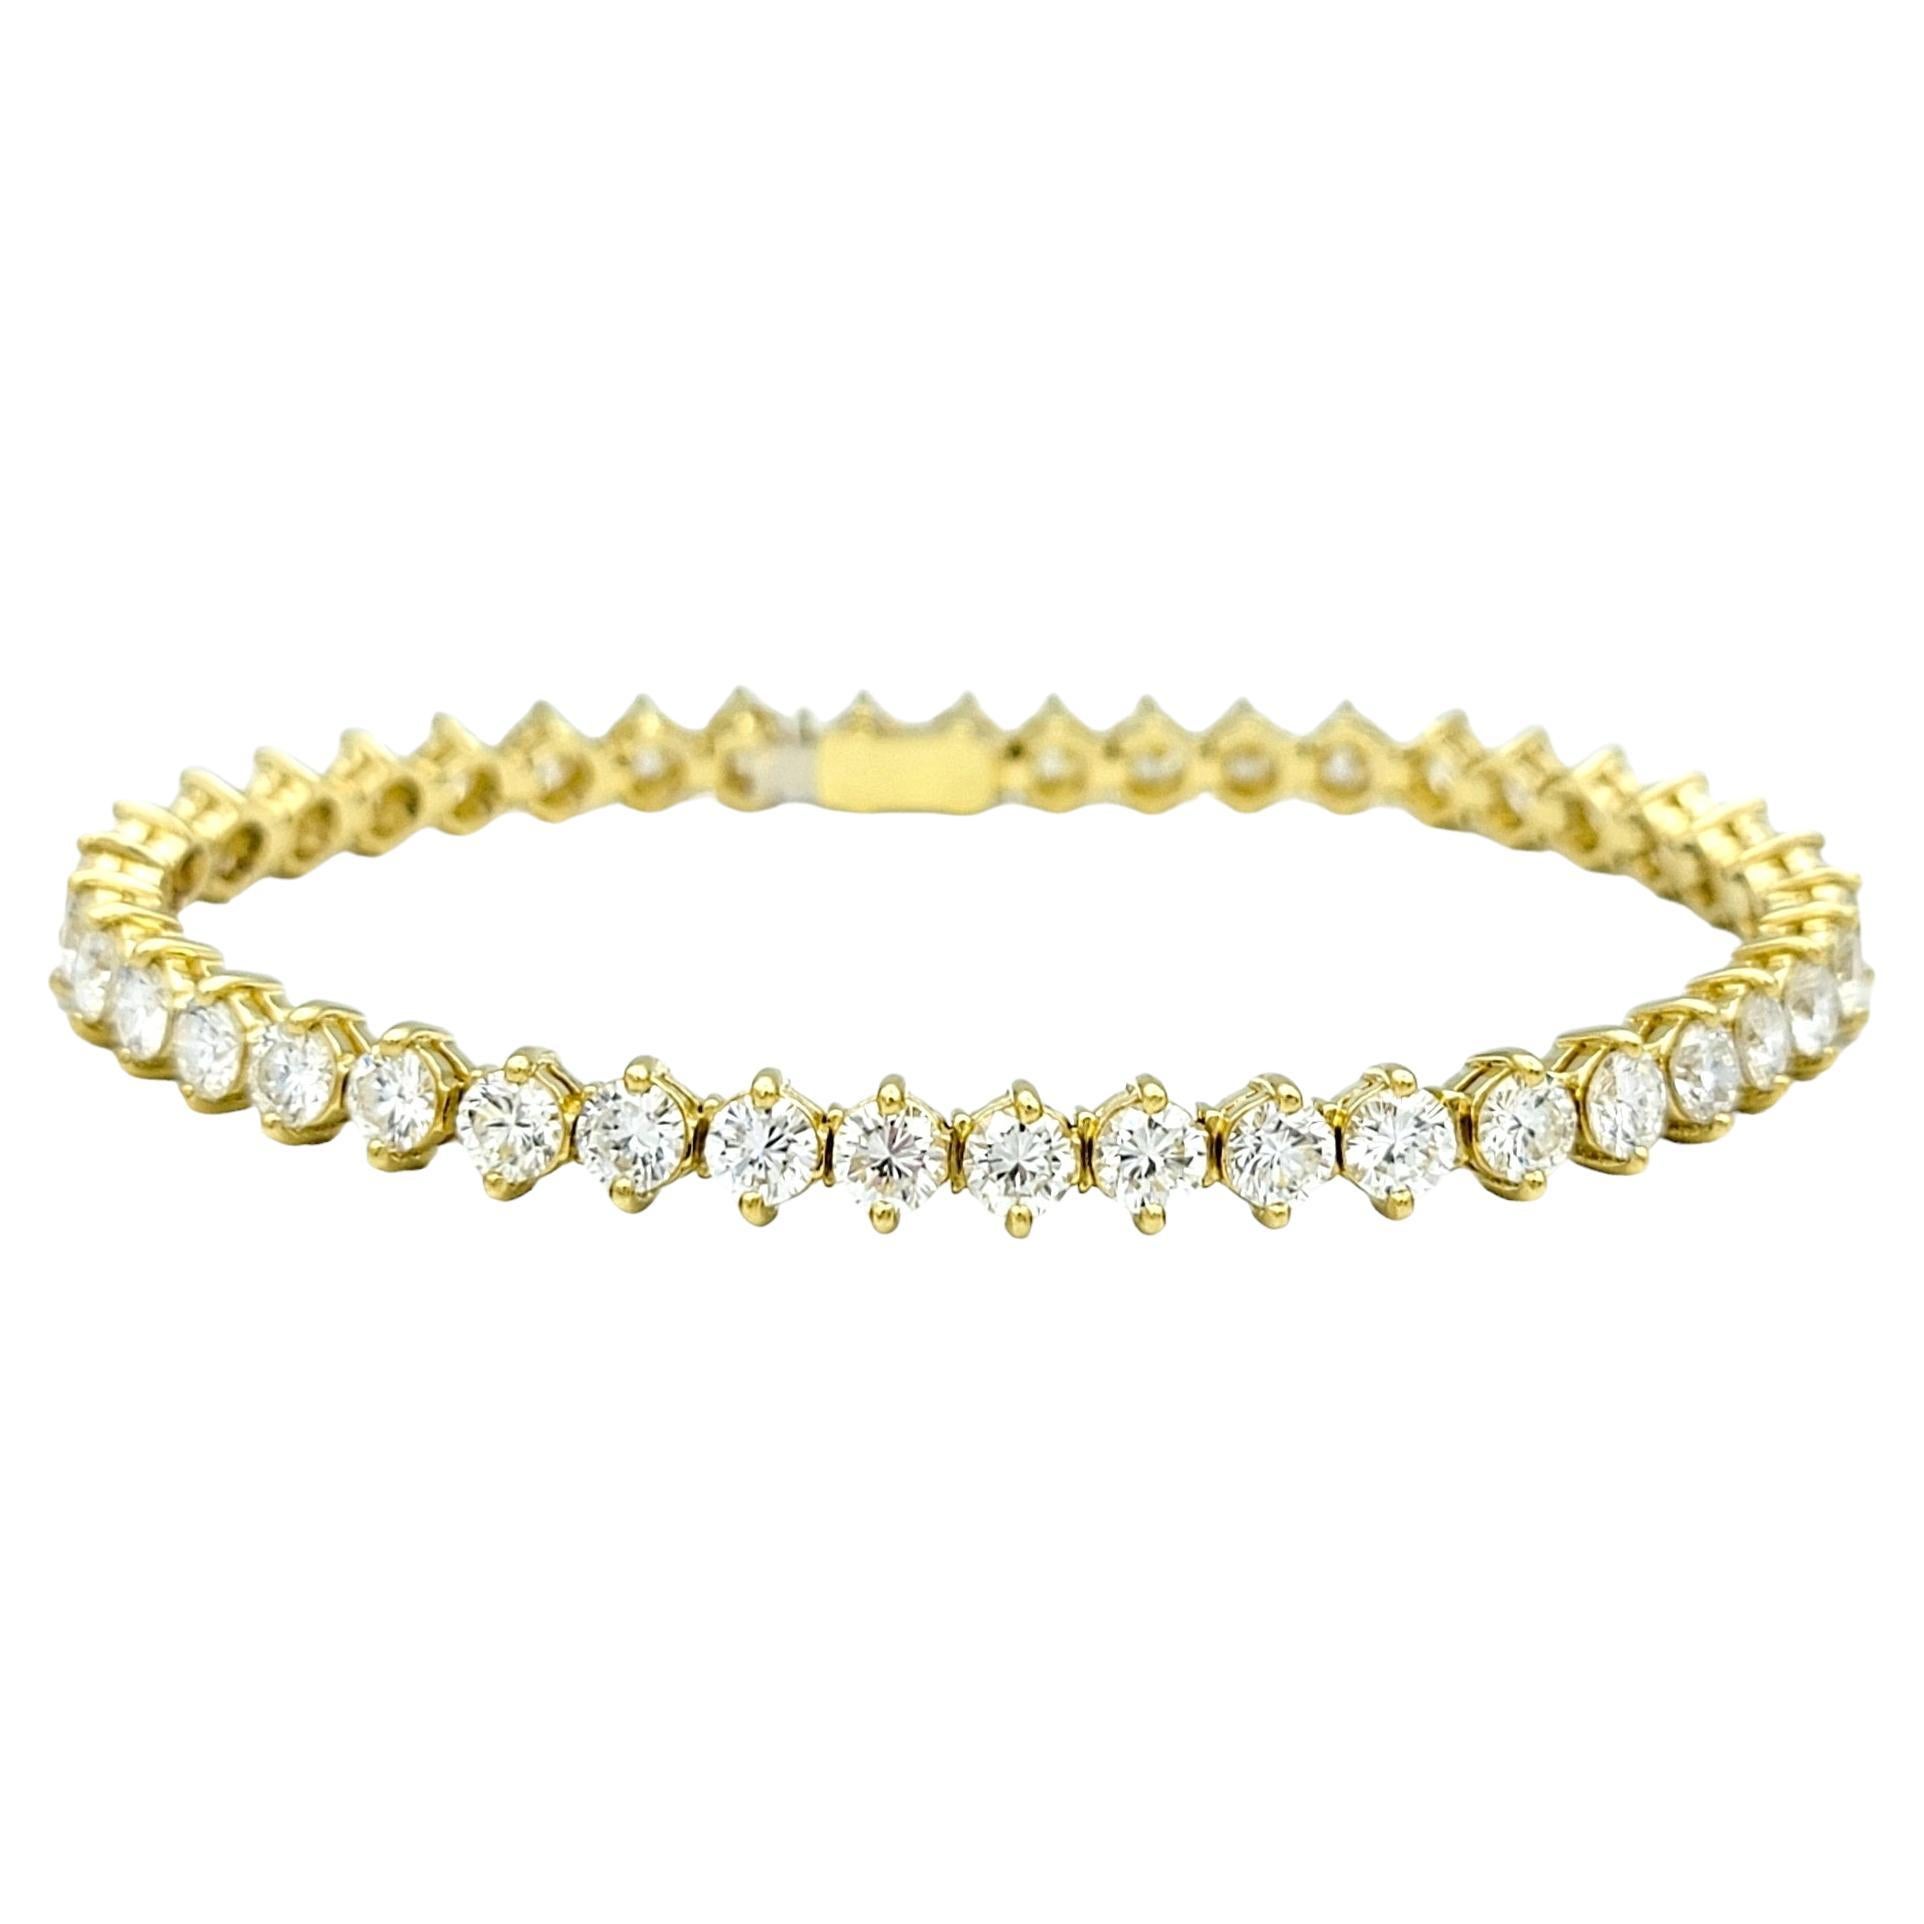 7.66 Carat Total Round Diamond Tennis Bracelet Set in 18 Karat Yellow Gold For Sale